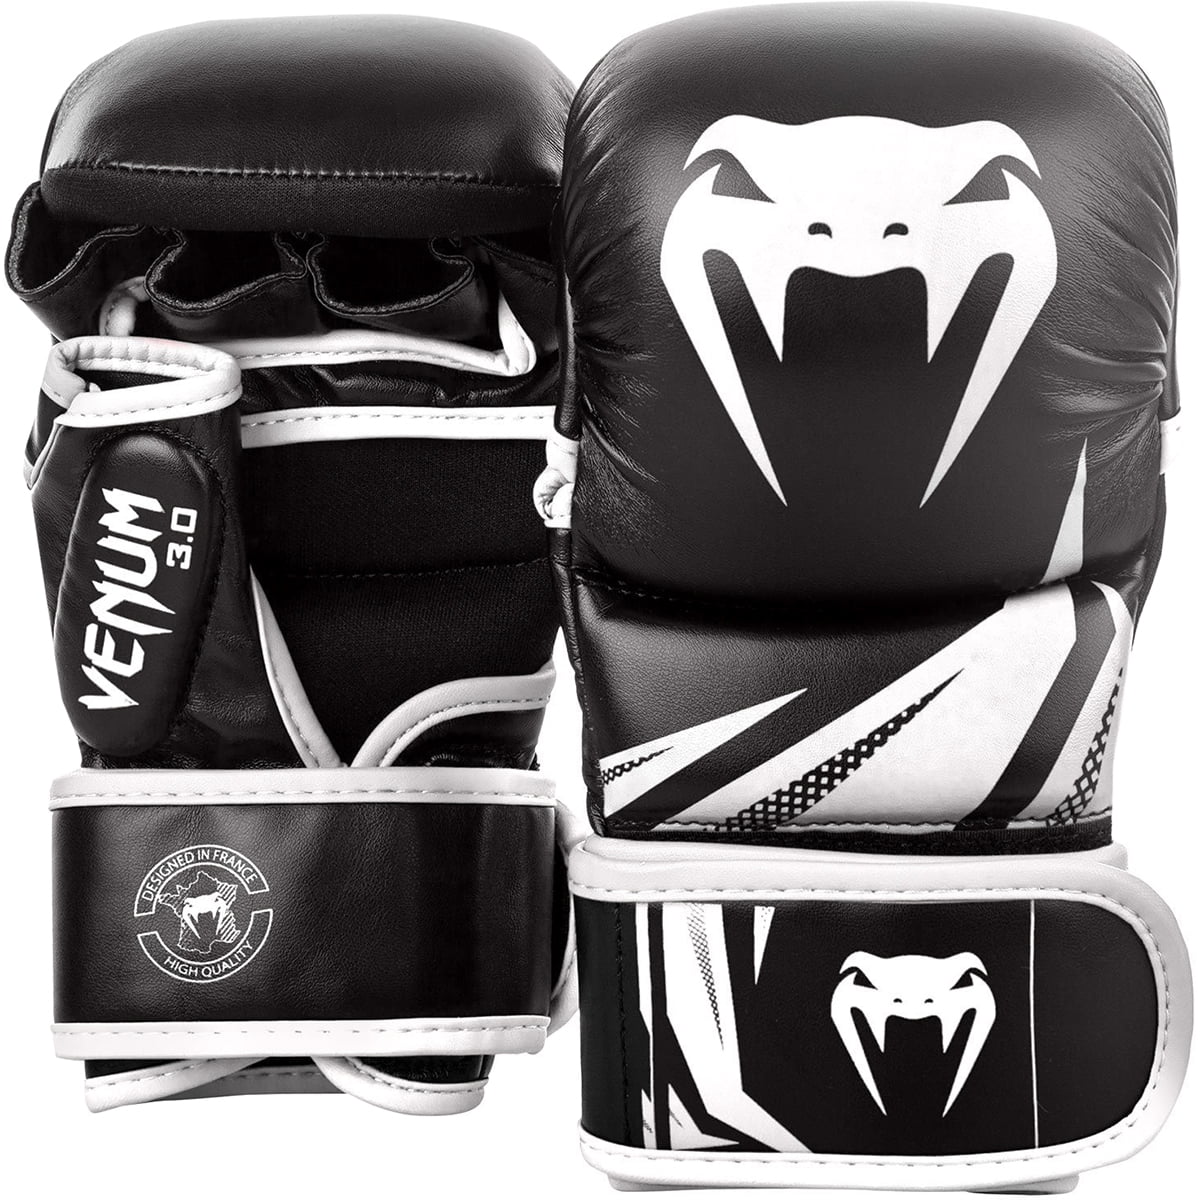 Boxing headgear VENUM challenger black/white mma muay thai kickboxing  martial 